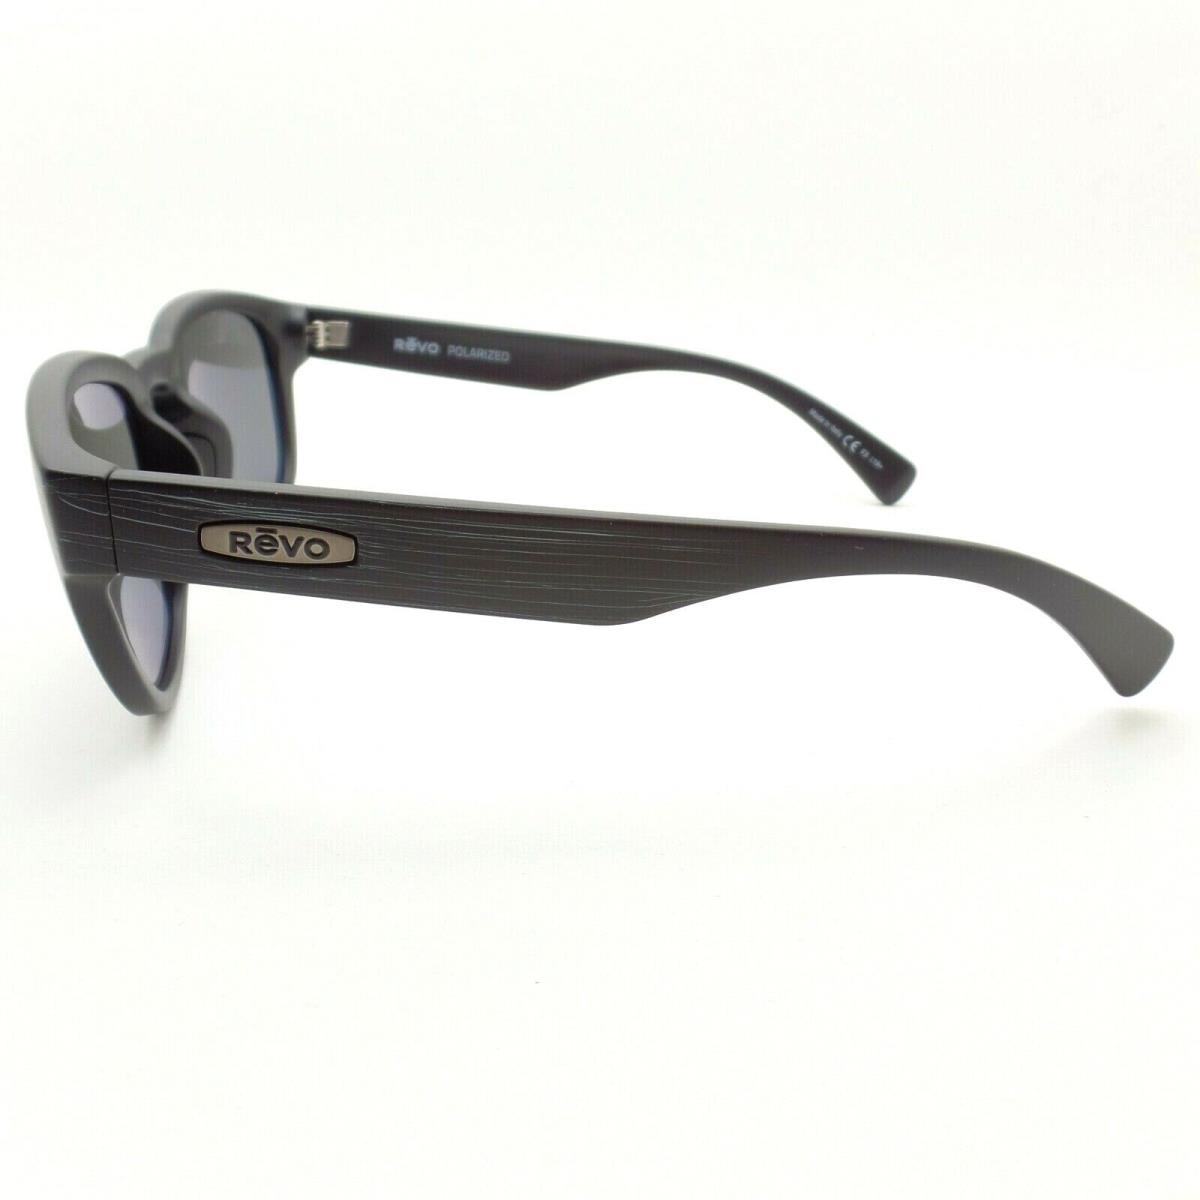 Revo sunglasses  - Matte Black Scratch Frame, Graphite Lens